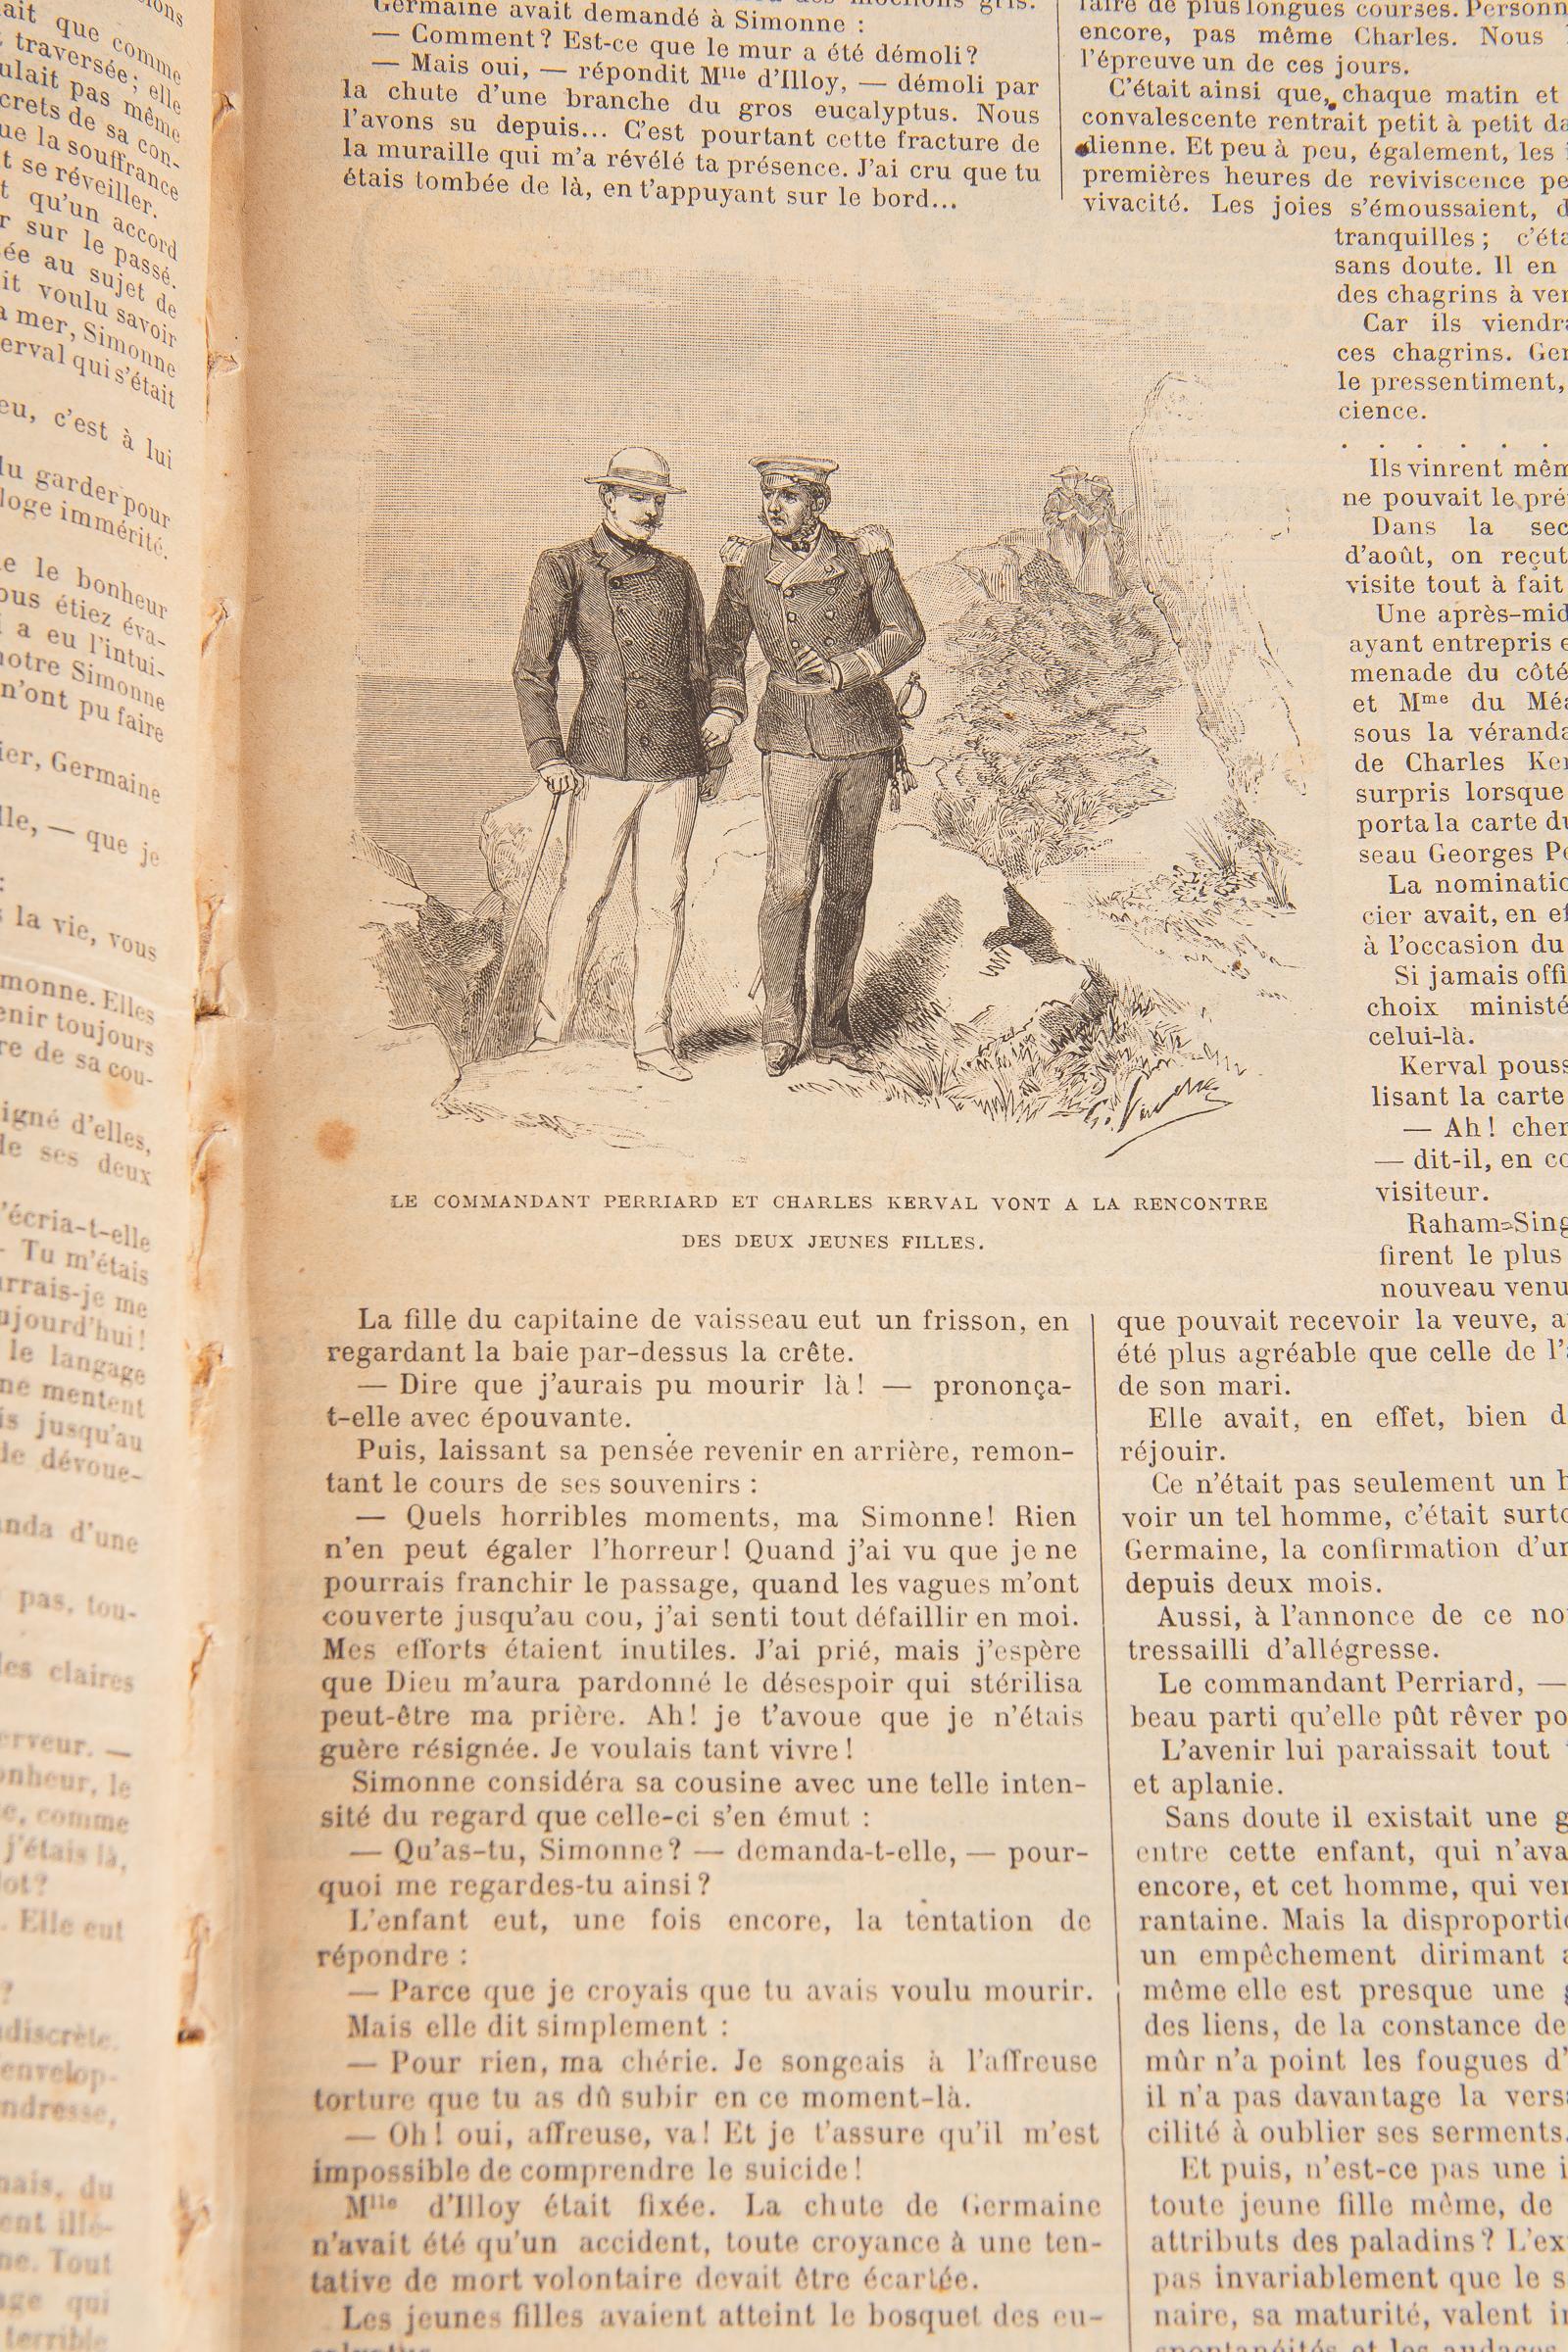 Leather French Book, La Mode Illustree-Journal de la Famille, 1889-1893